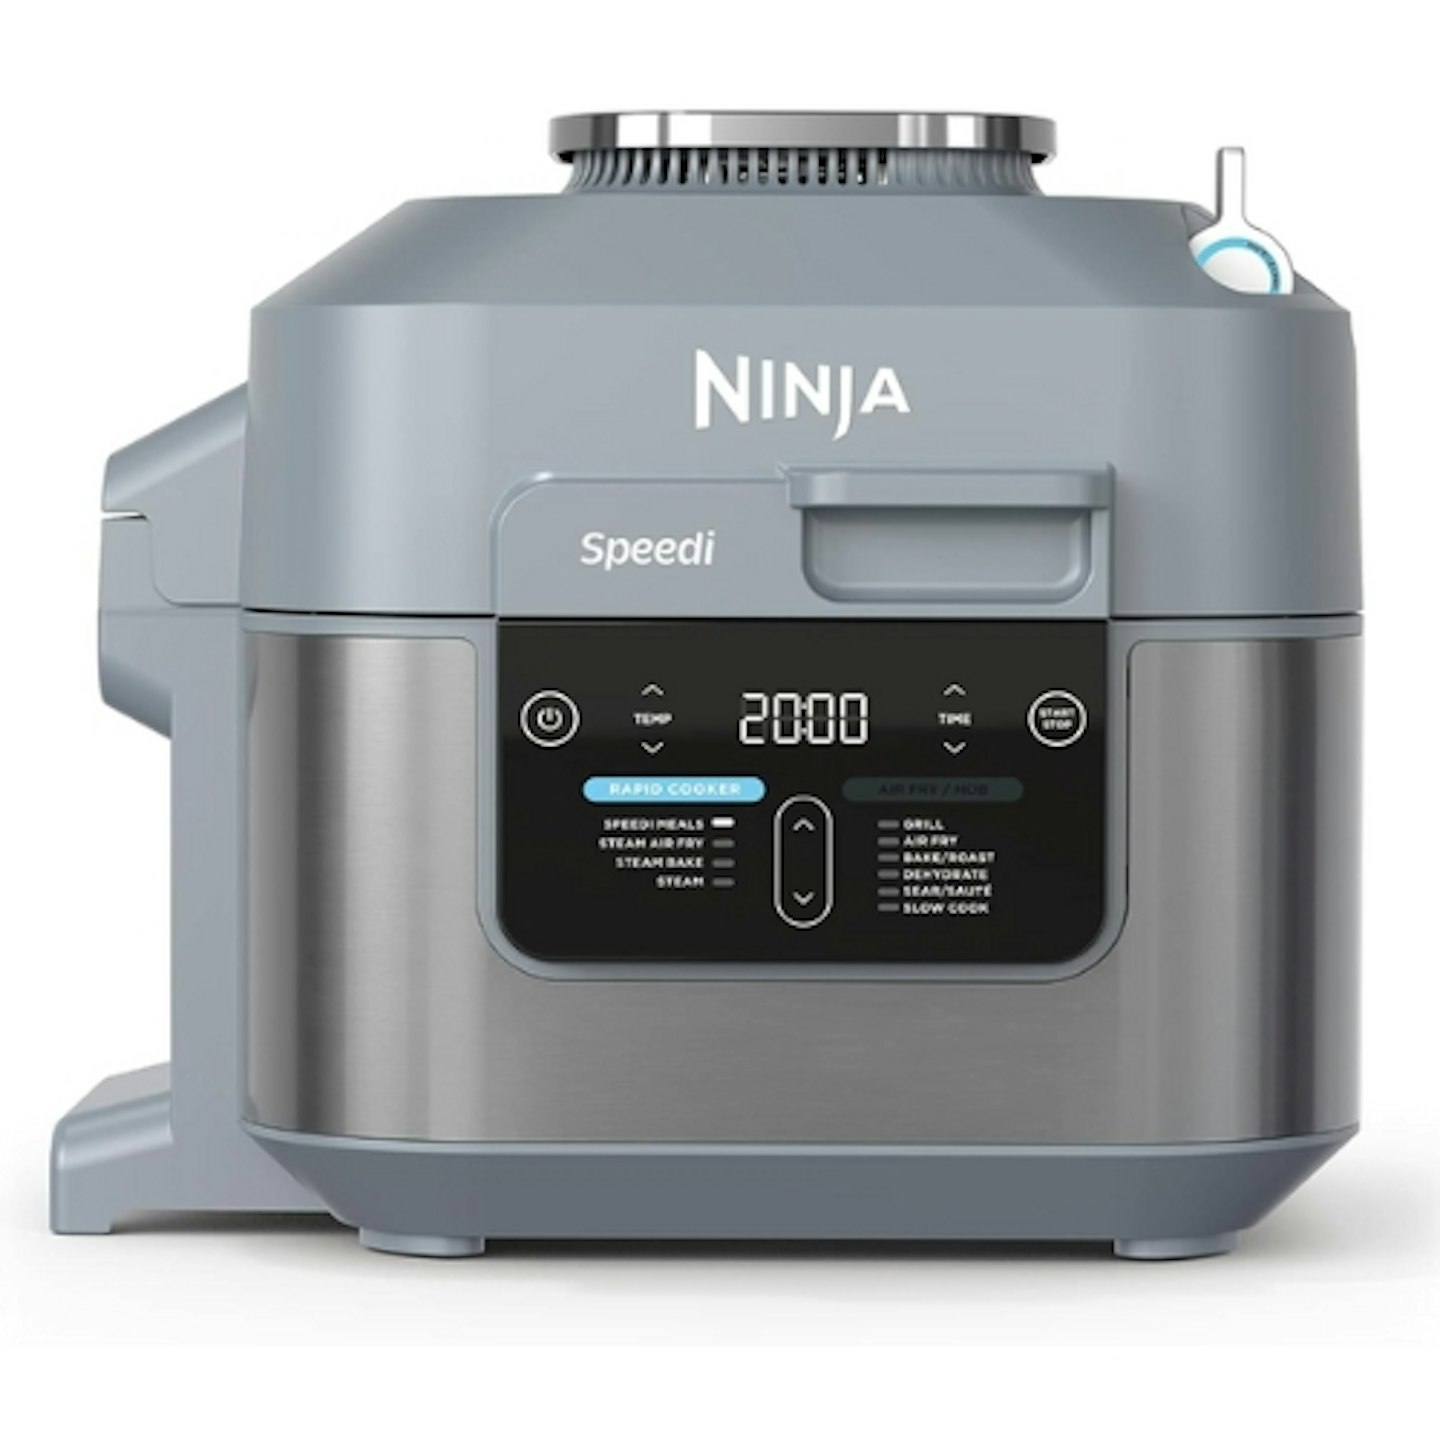 Ninja Speedi 10-in-1 Rapid Multi Cooker and Air Fryer